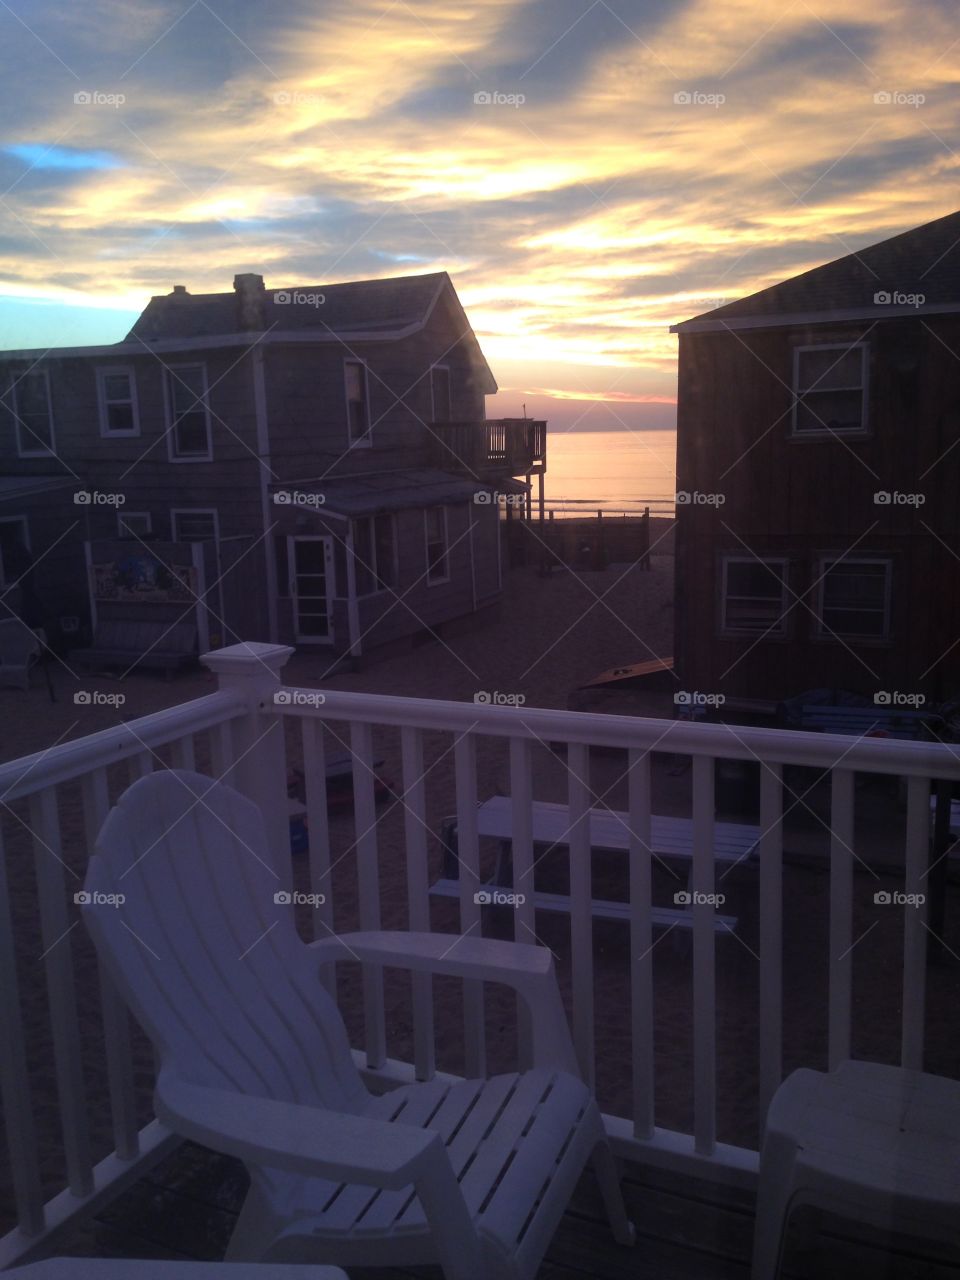 A peaceful view of a brilliant sunrise over the Salisbury Beach, MA coastline from a beach house.